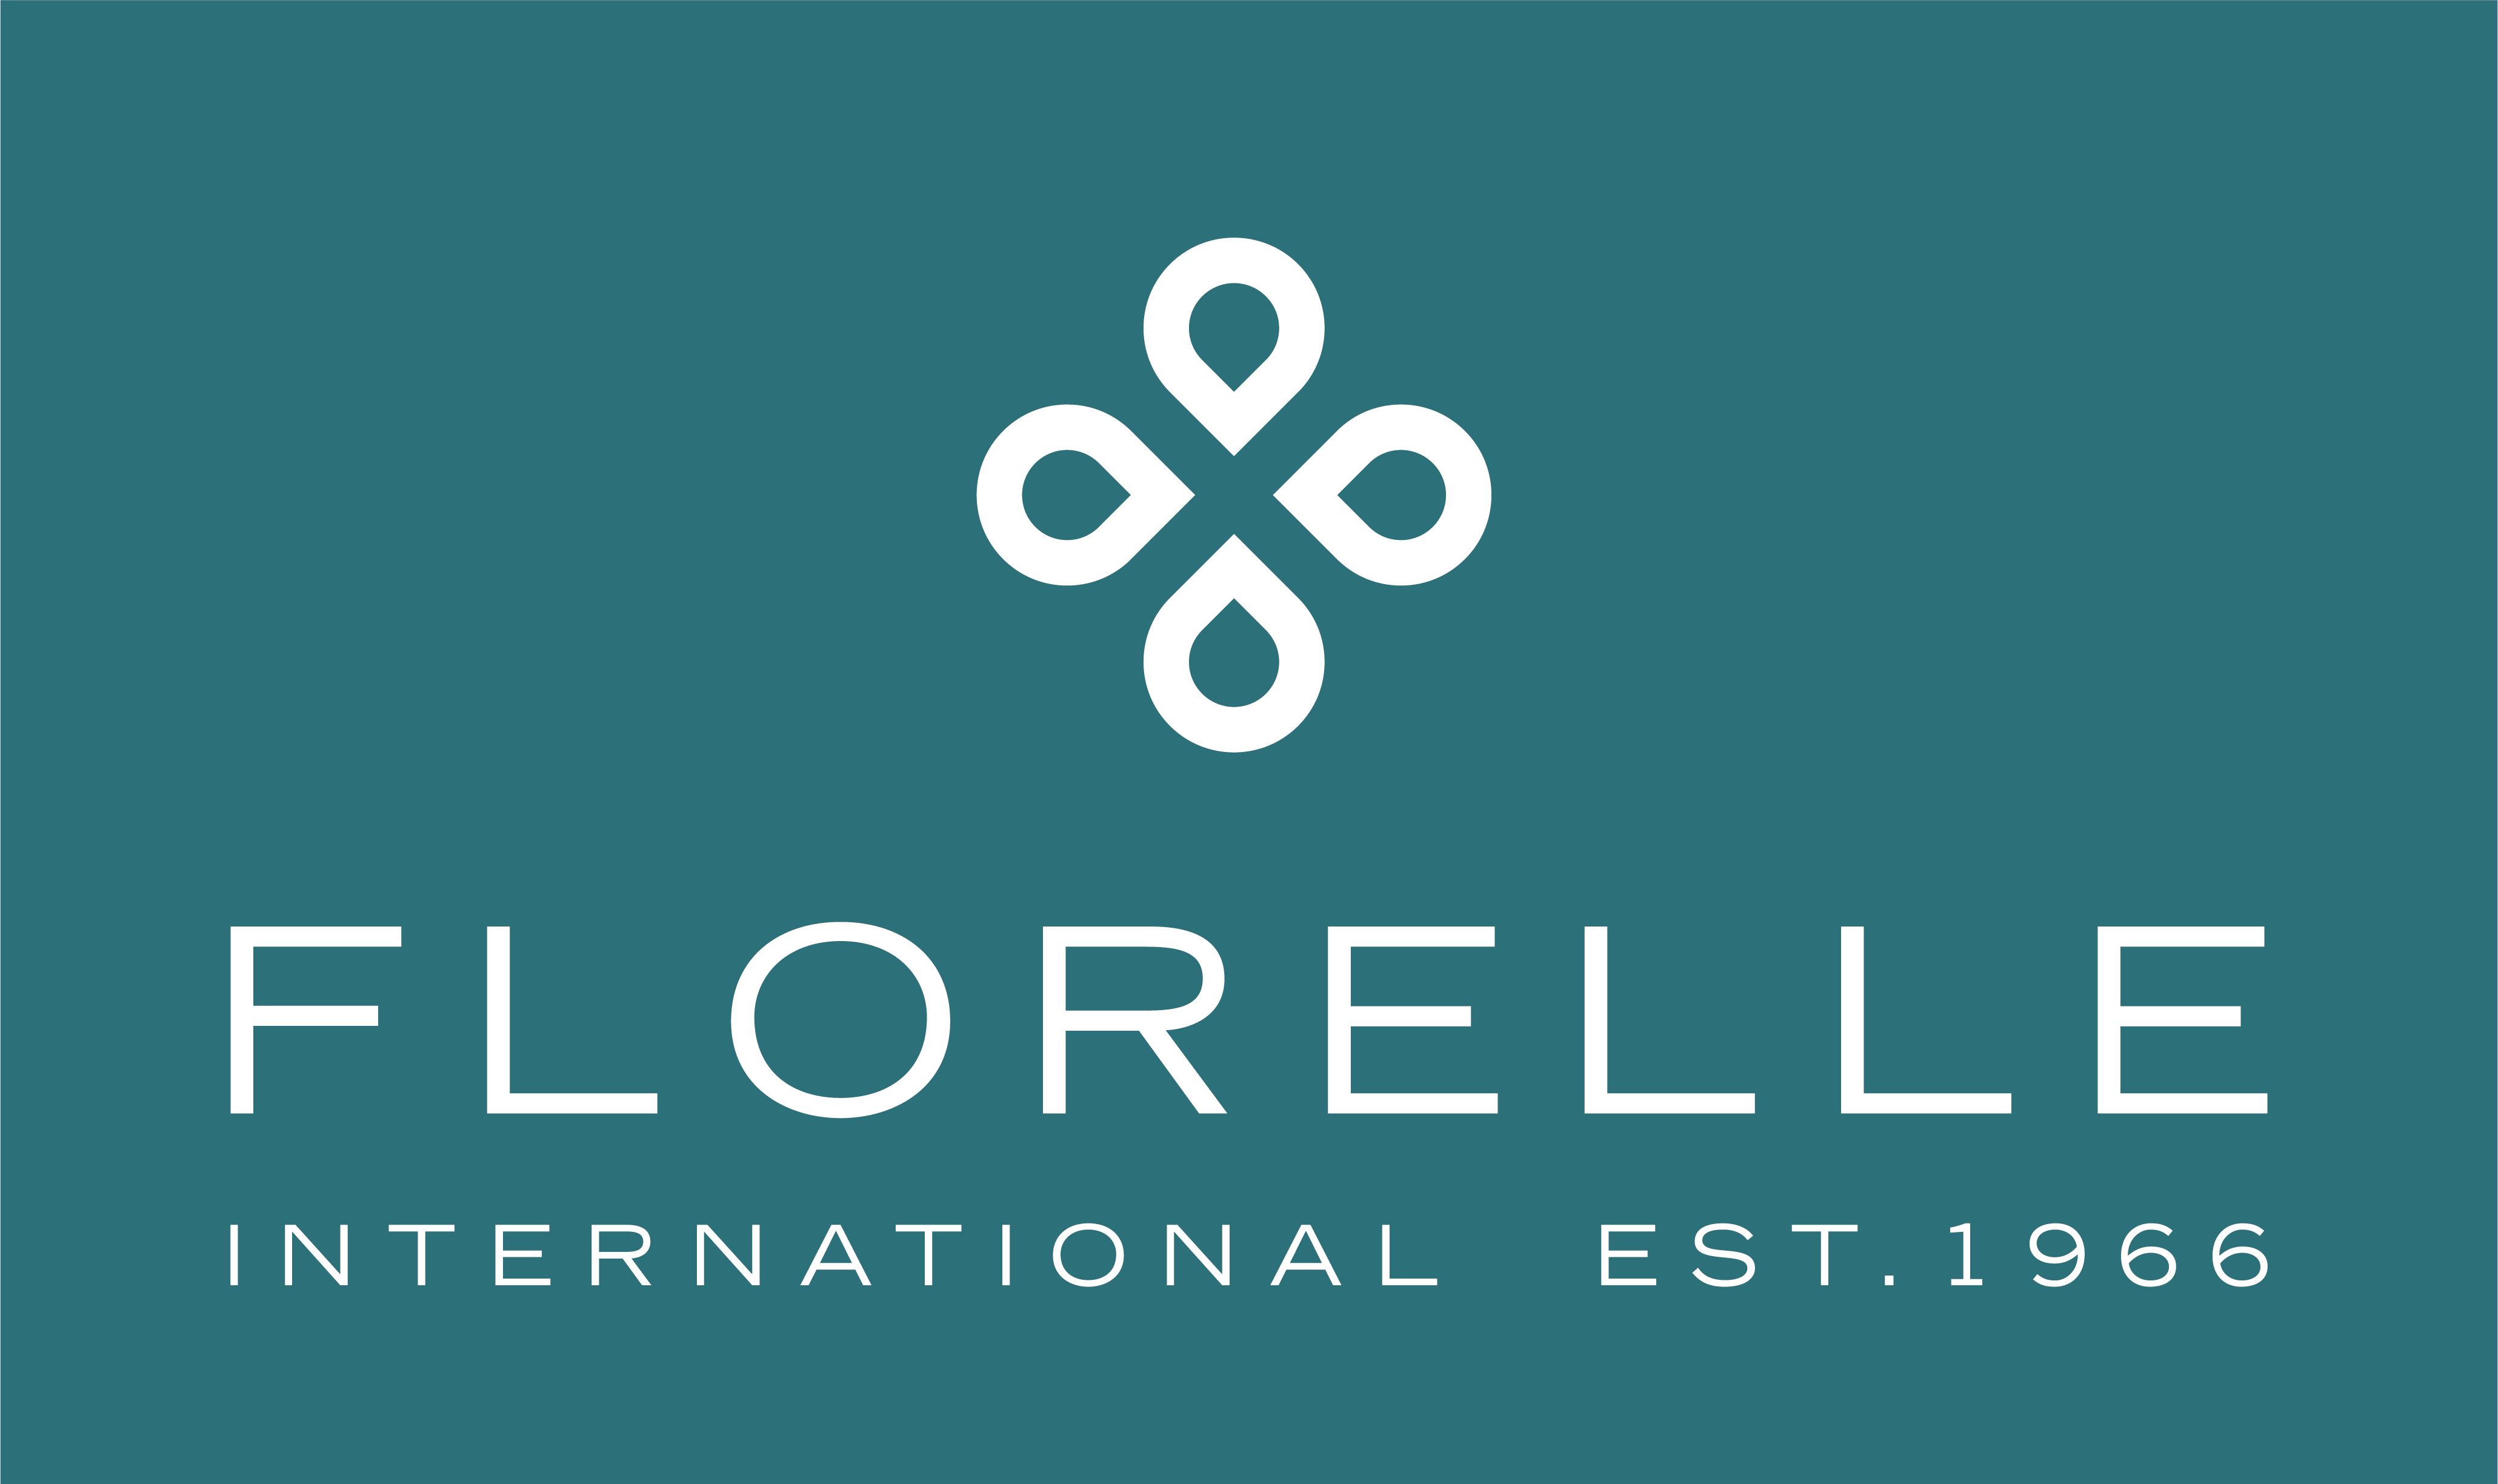 Florelle International Ltd